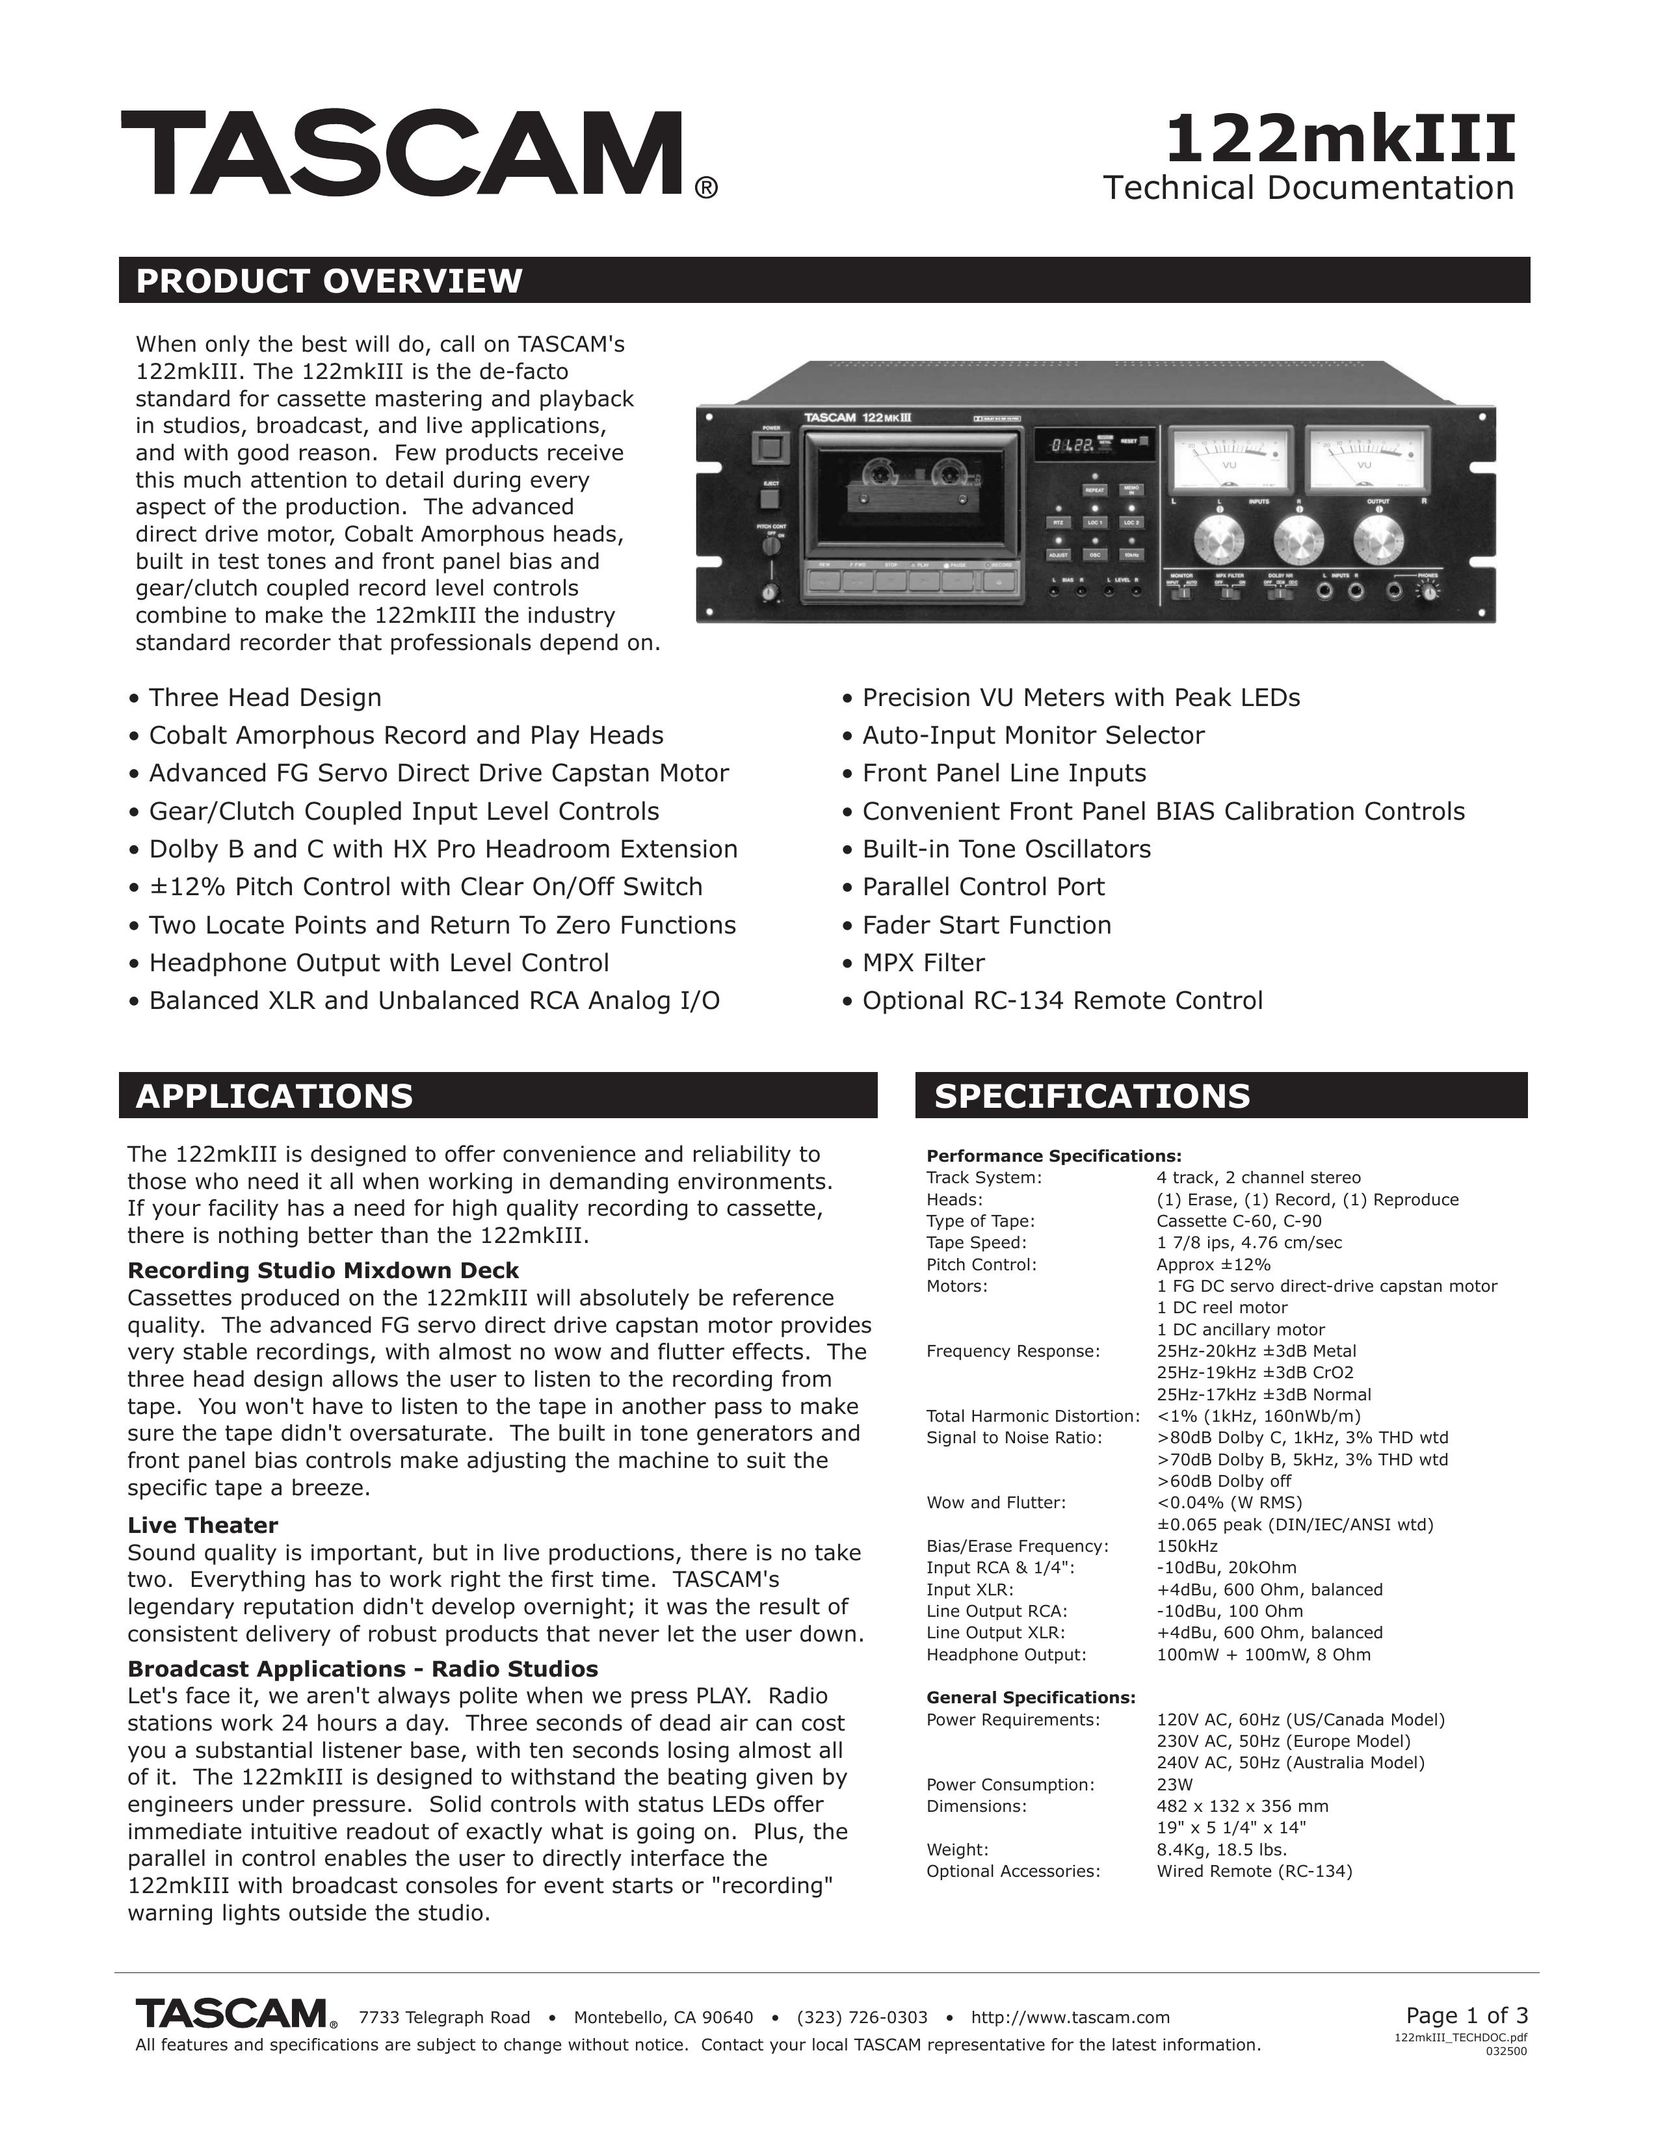 Tascam 122MKIII Computer Monitor User Manual